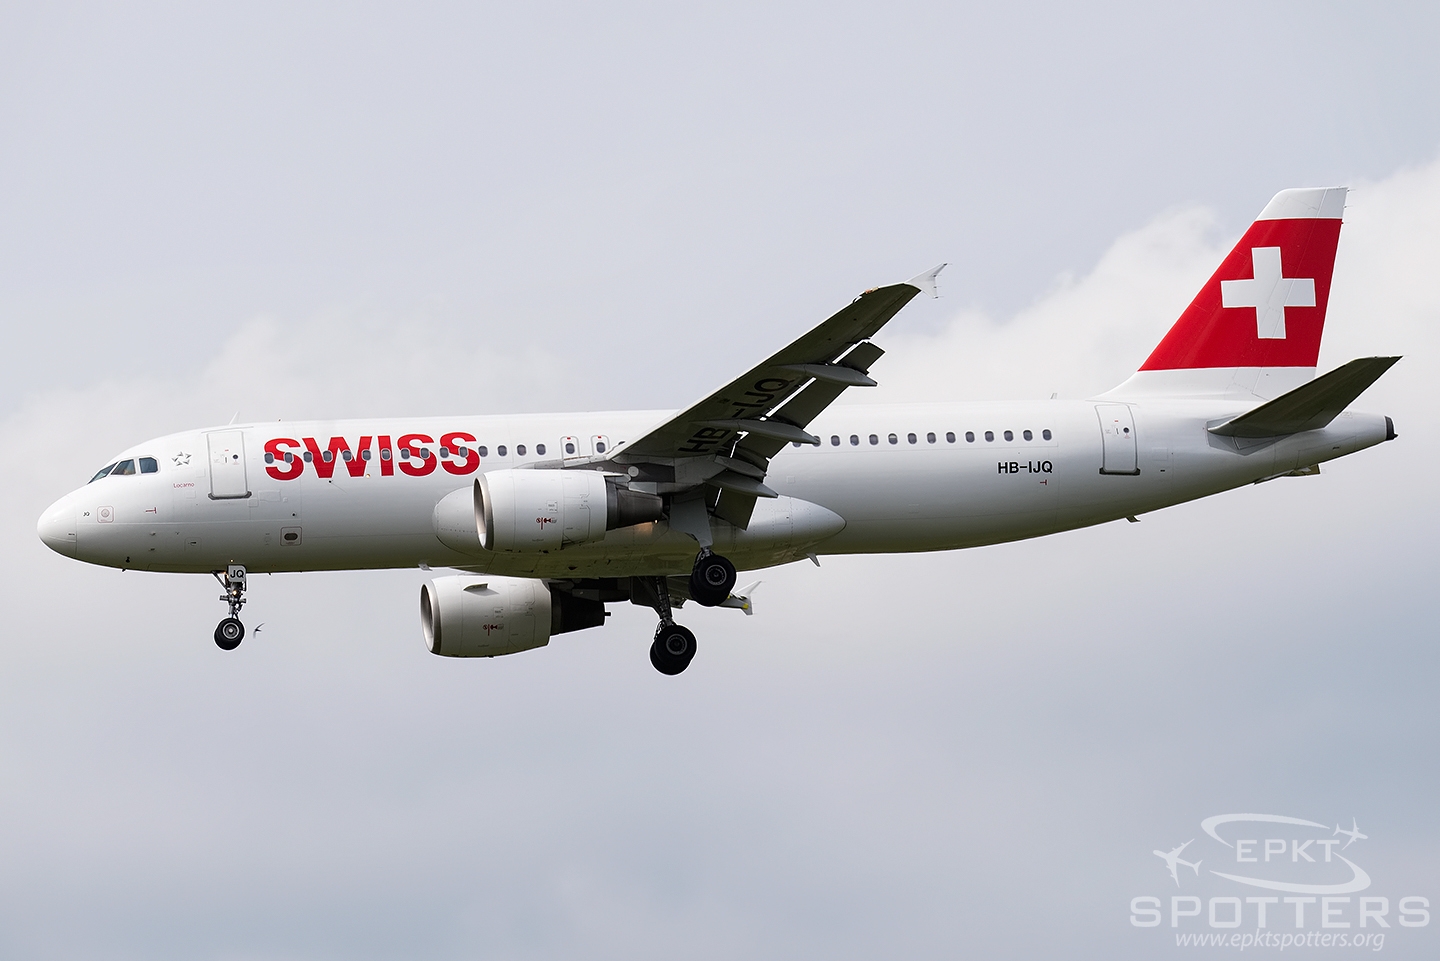 HB-IJQ - Airbus A320 -214 (Swiss International Air Lines) / Heathrow - London United Kingdom [EGLL/LHR]